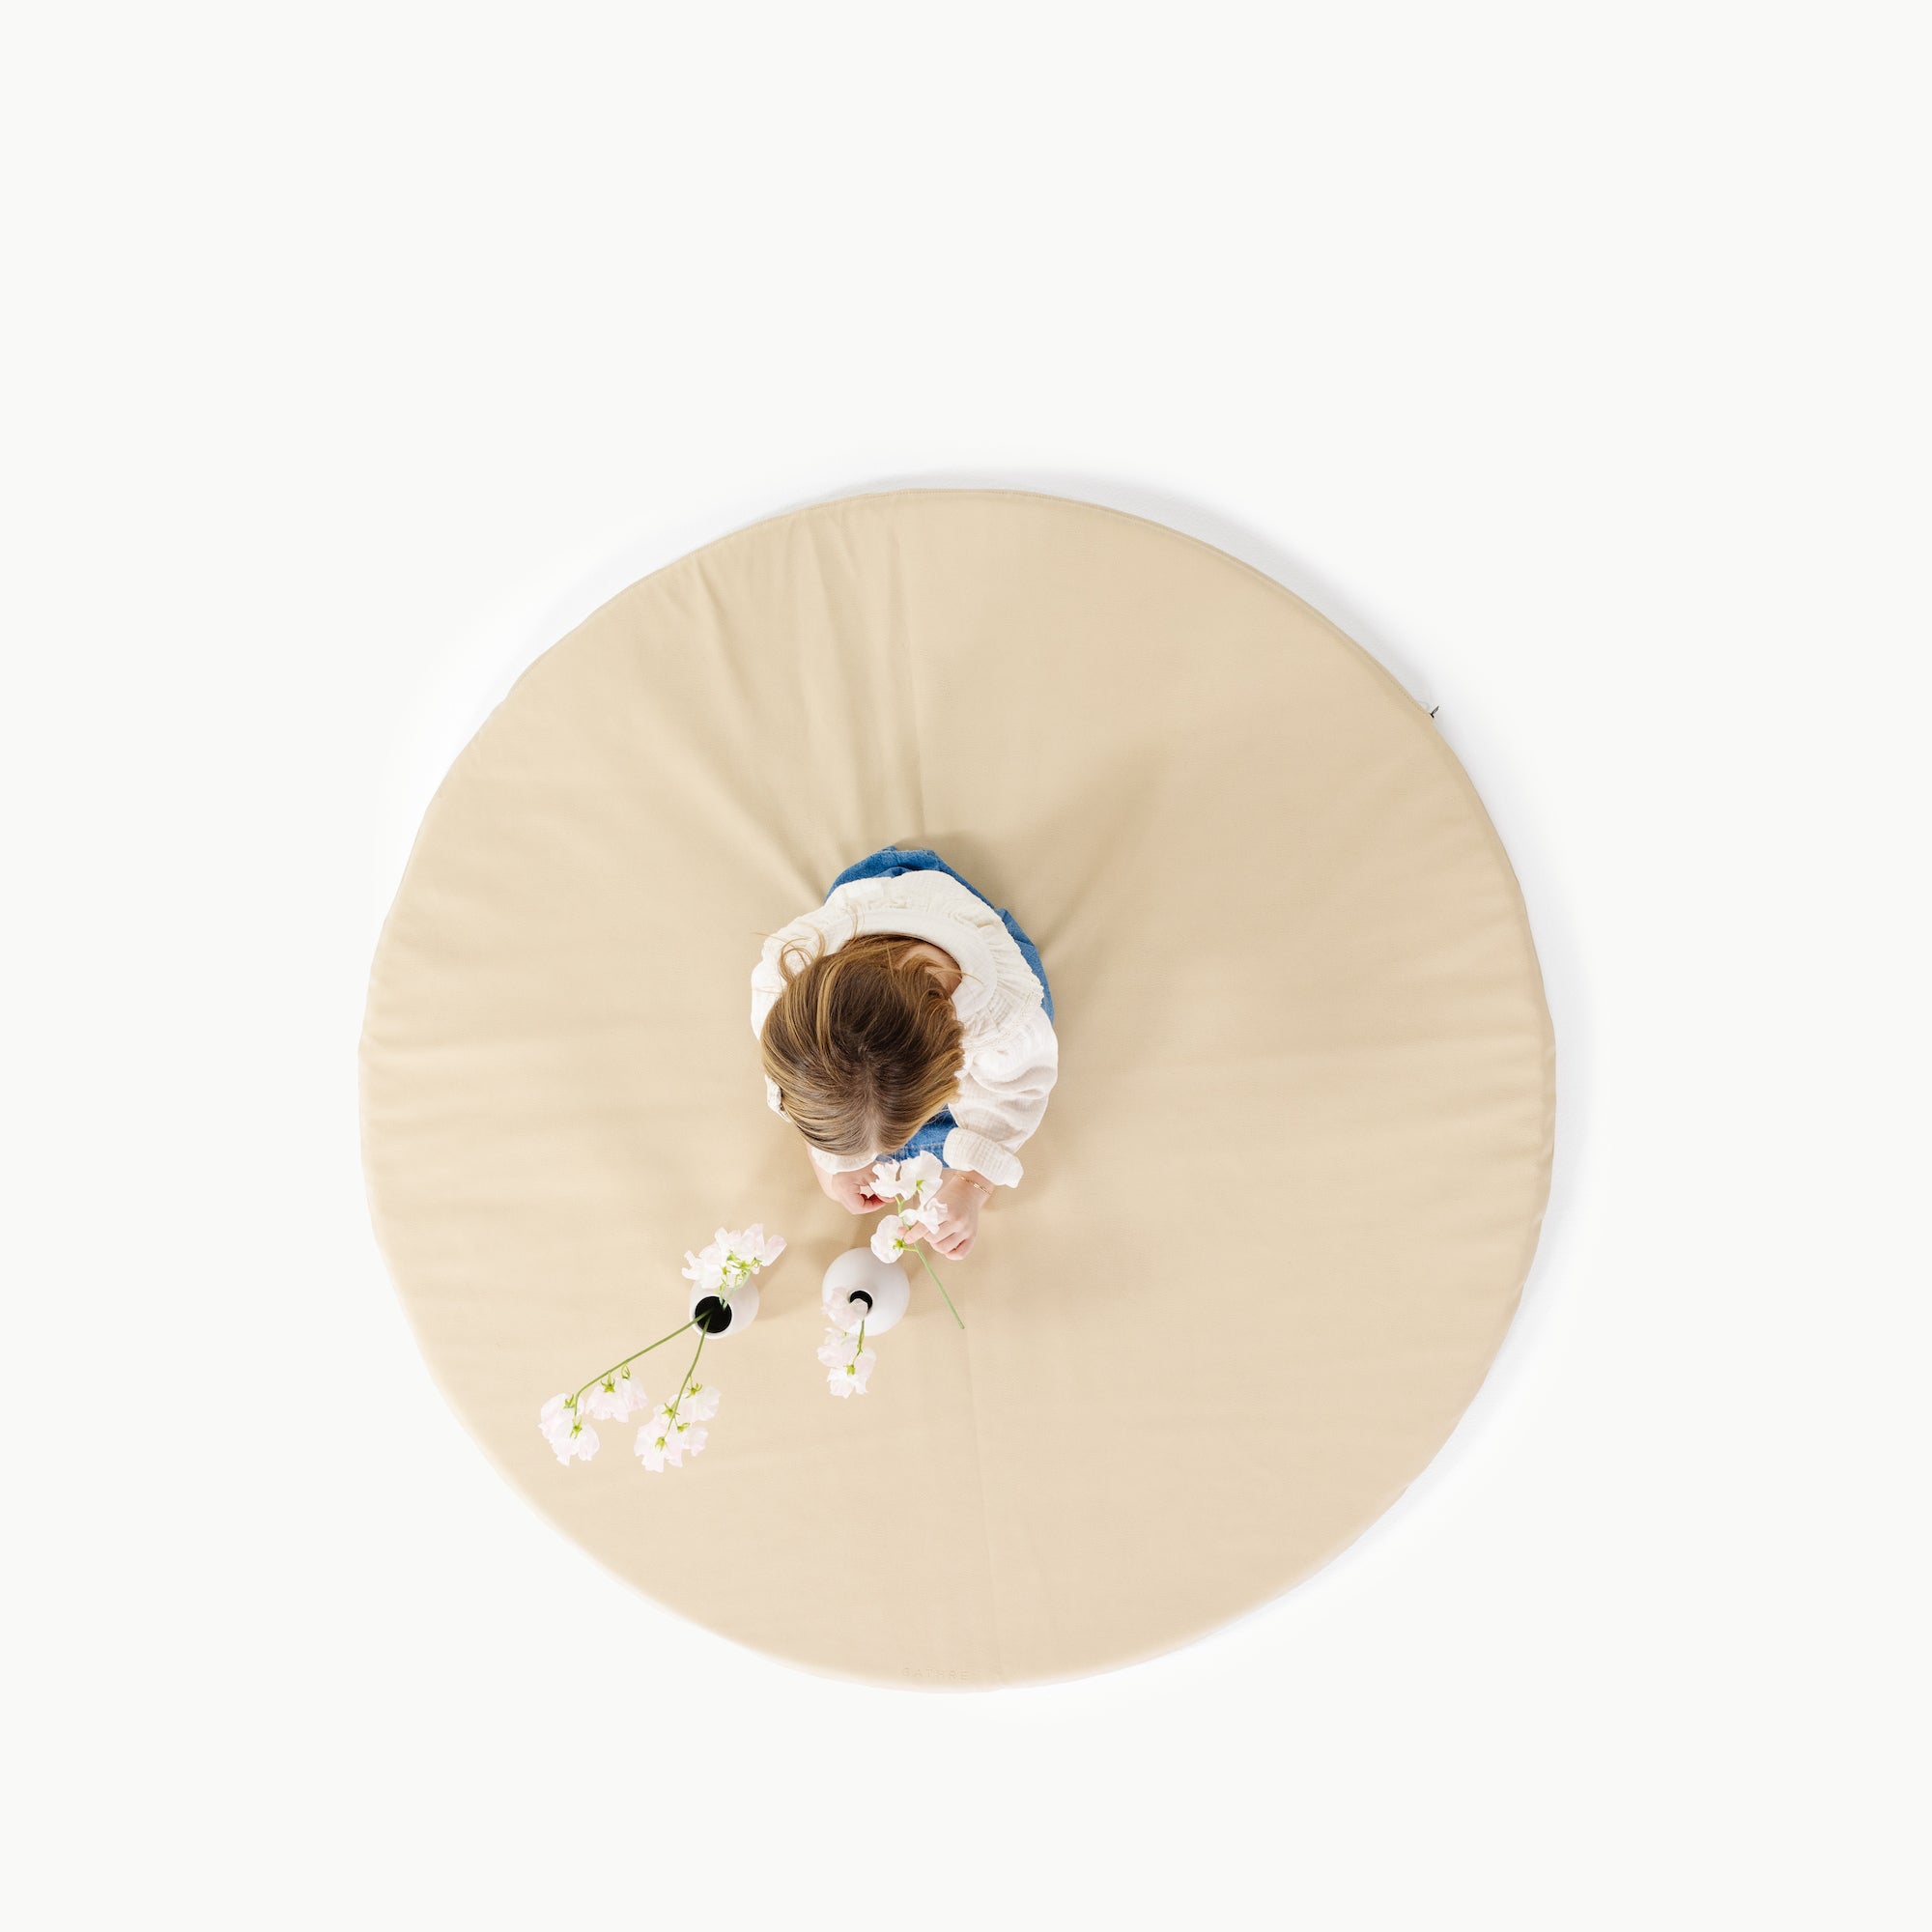 Créme@overhead of little girl playing on padded mat